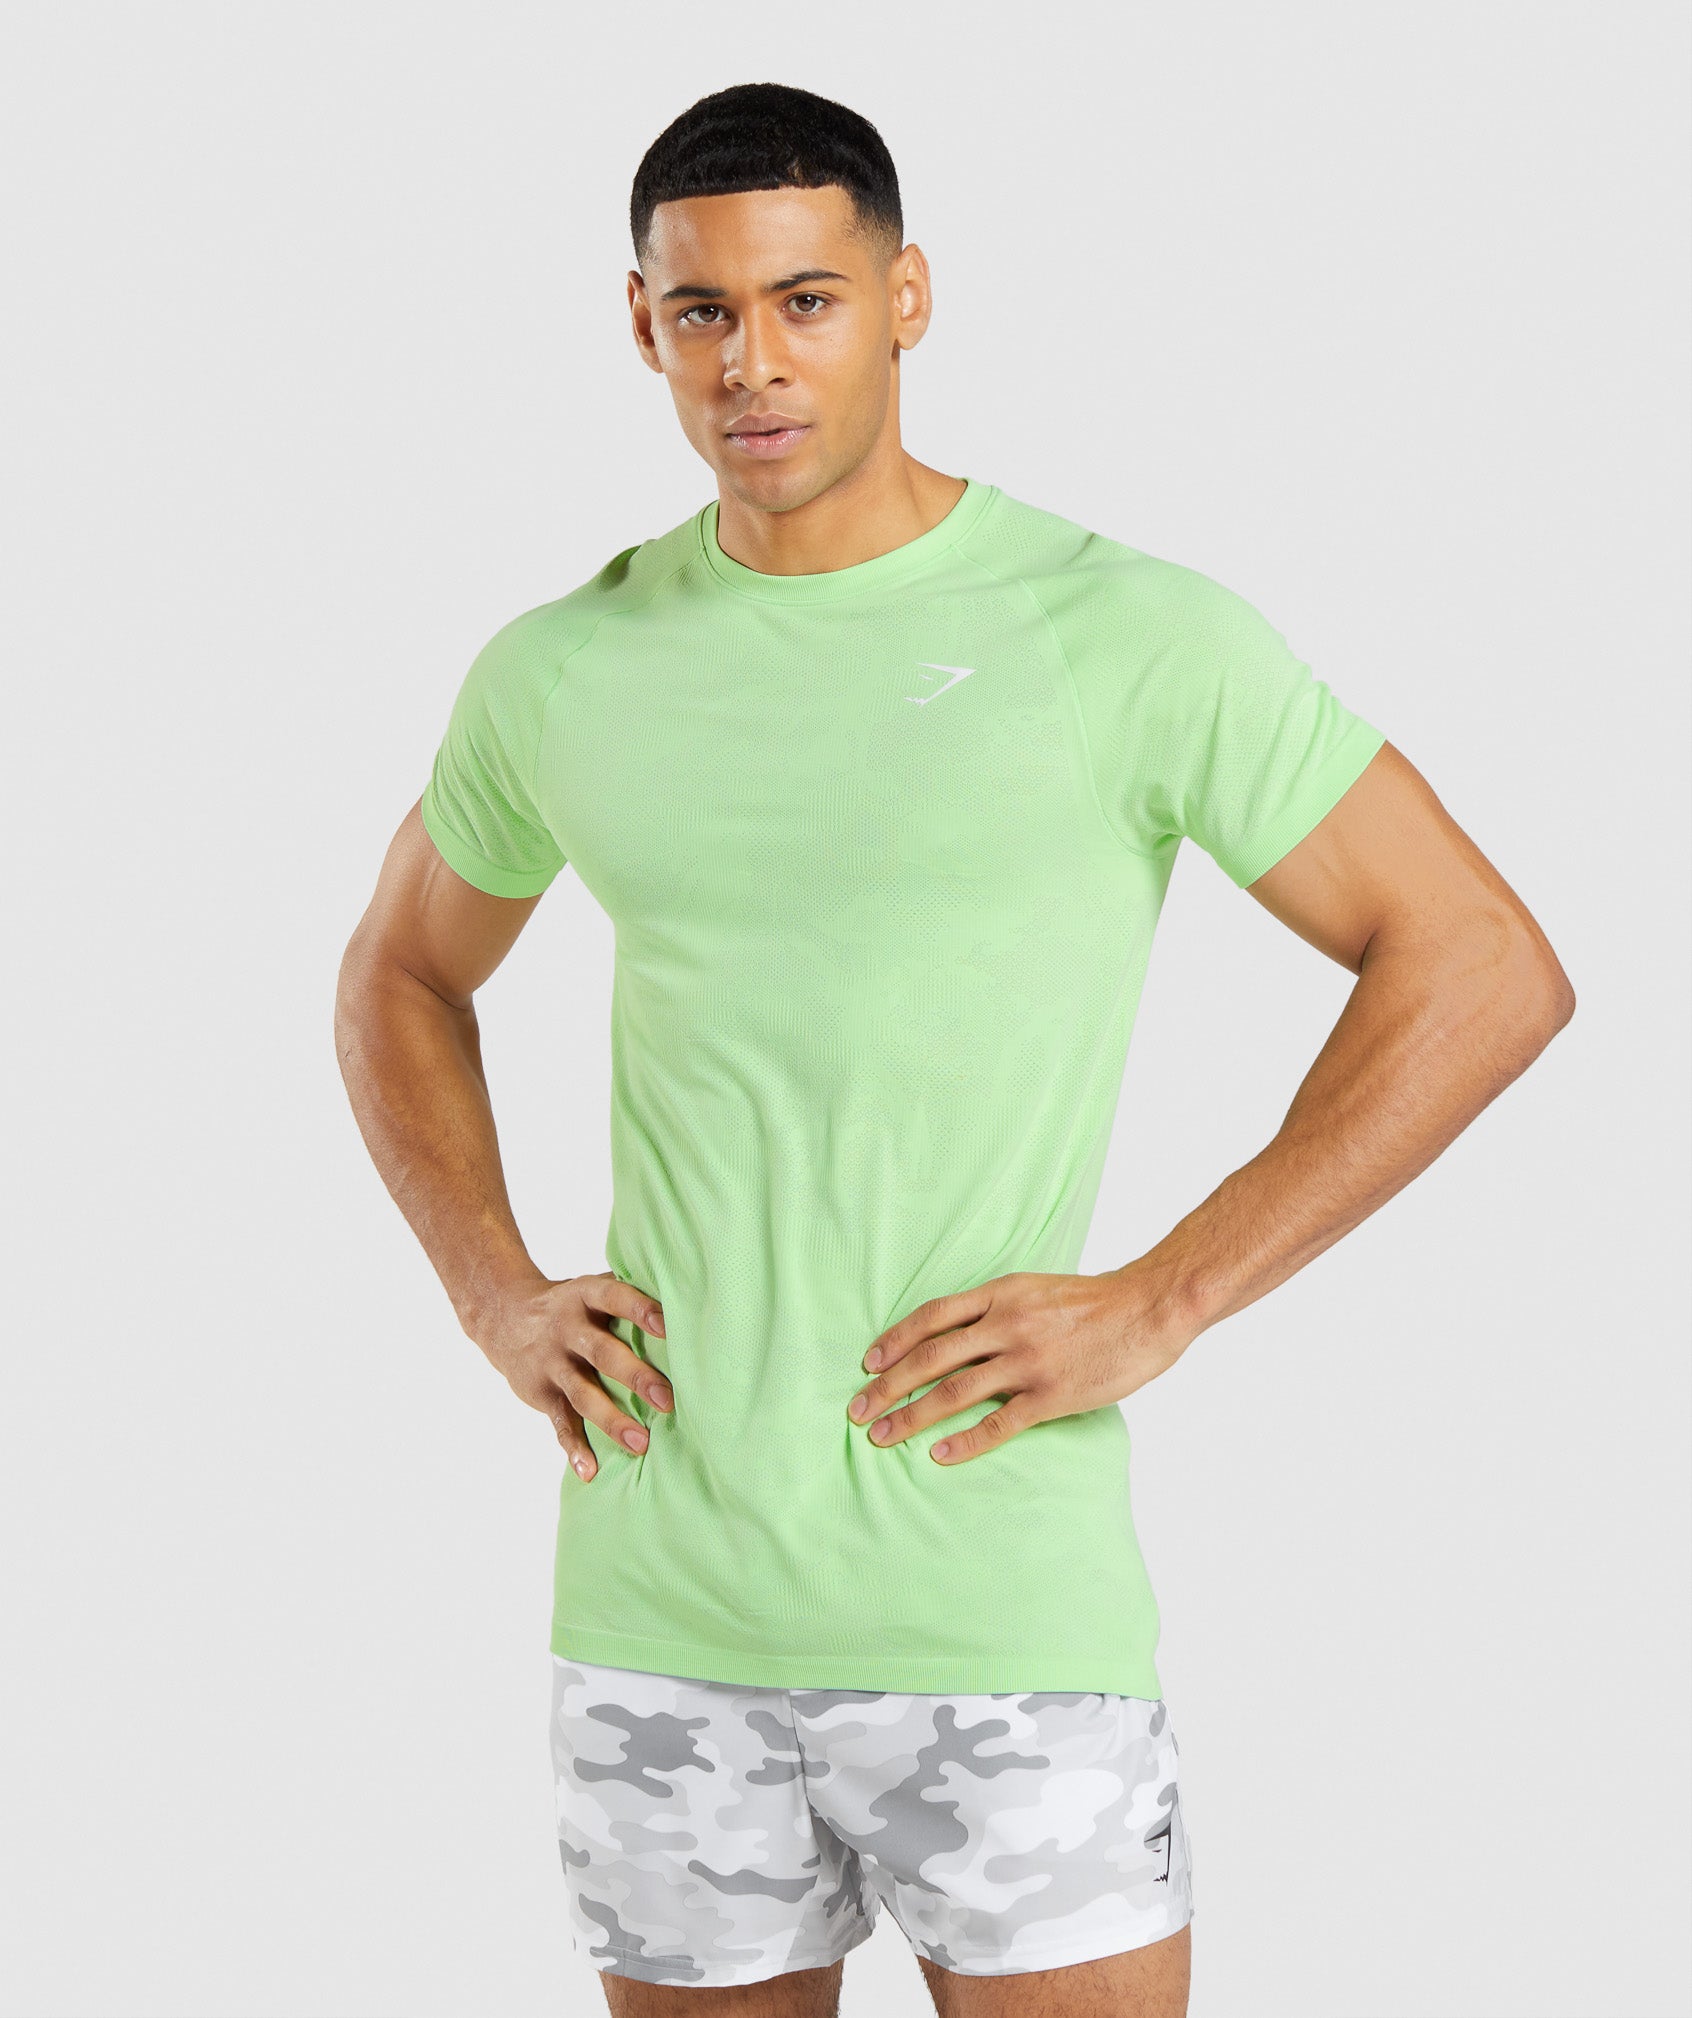 Geo Seamless T-Shirt in Bali Green/White